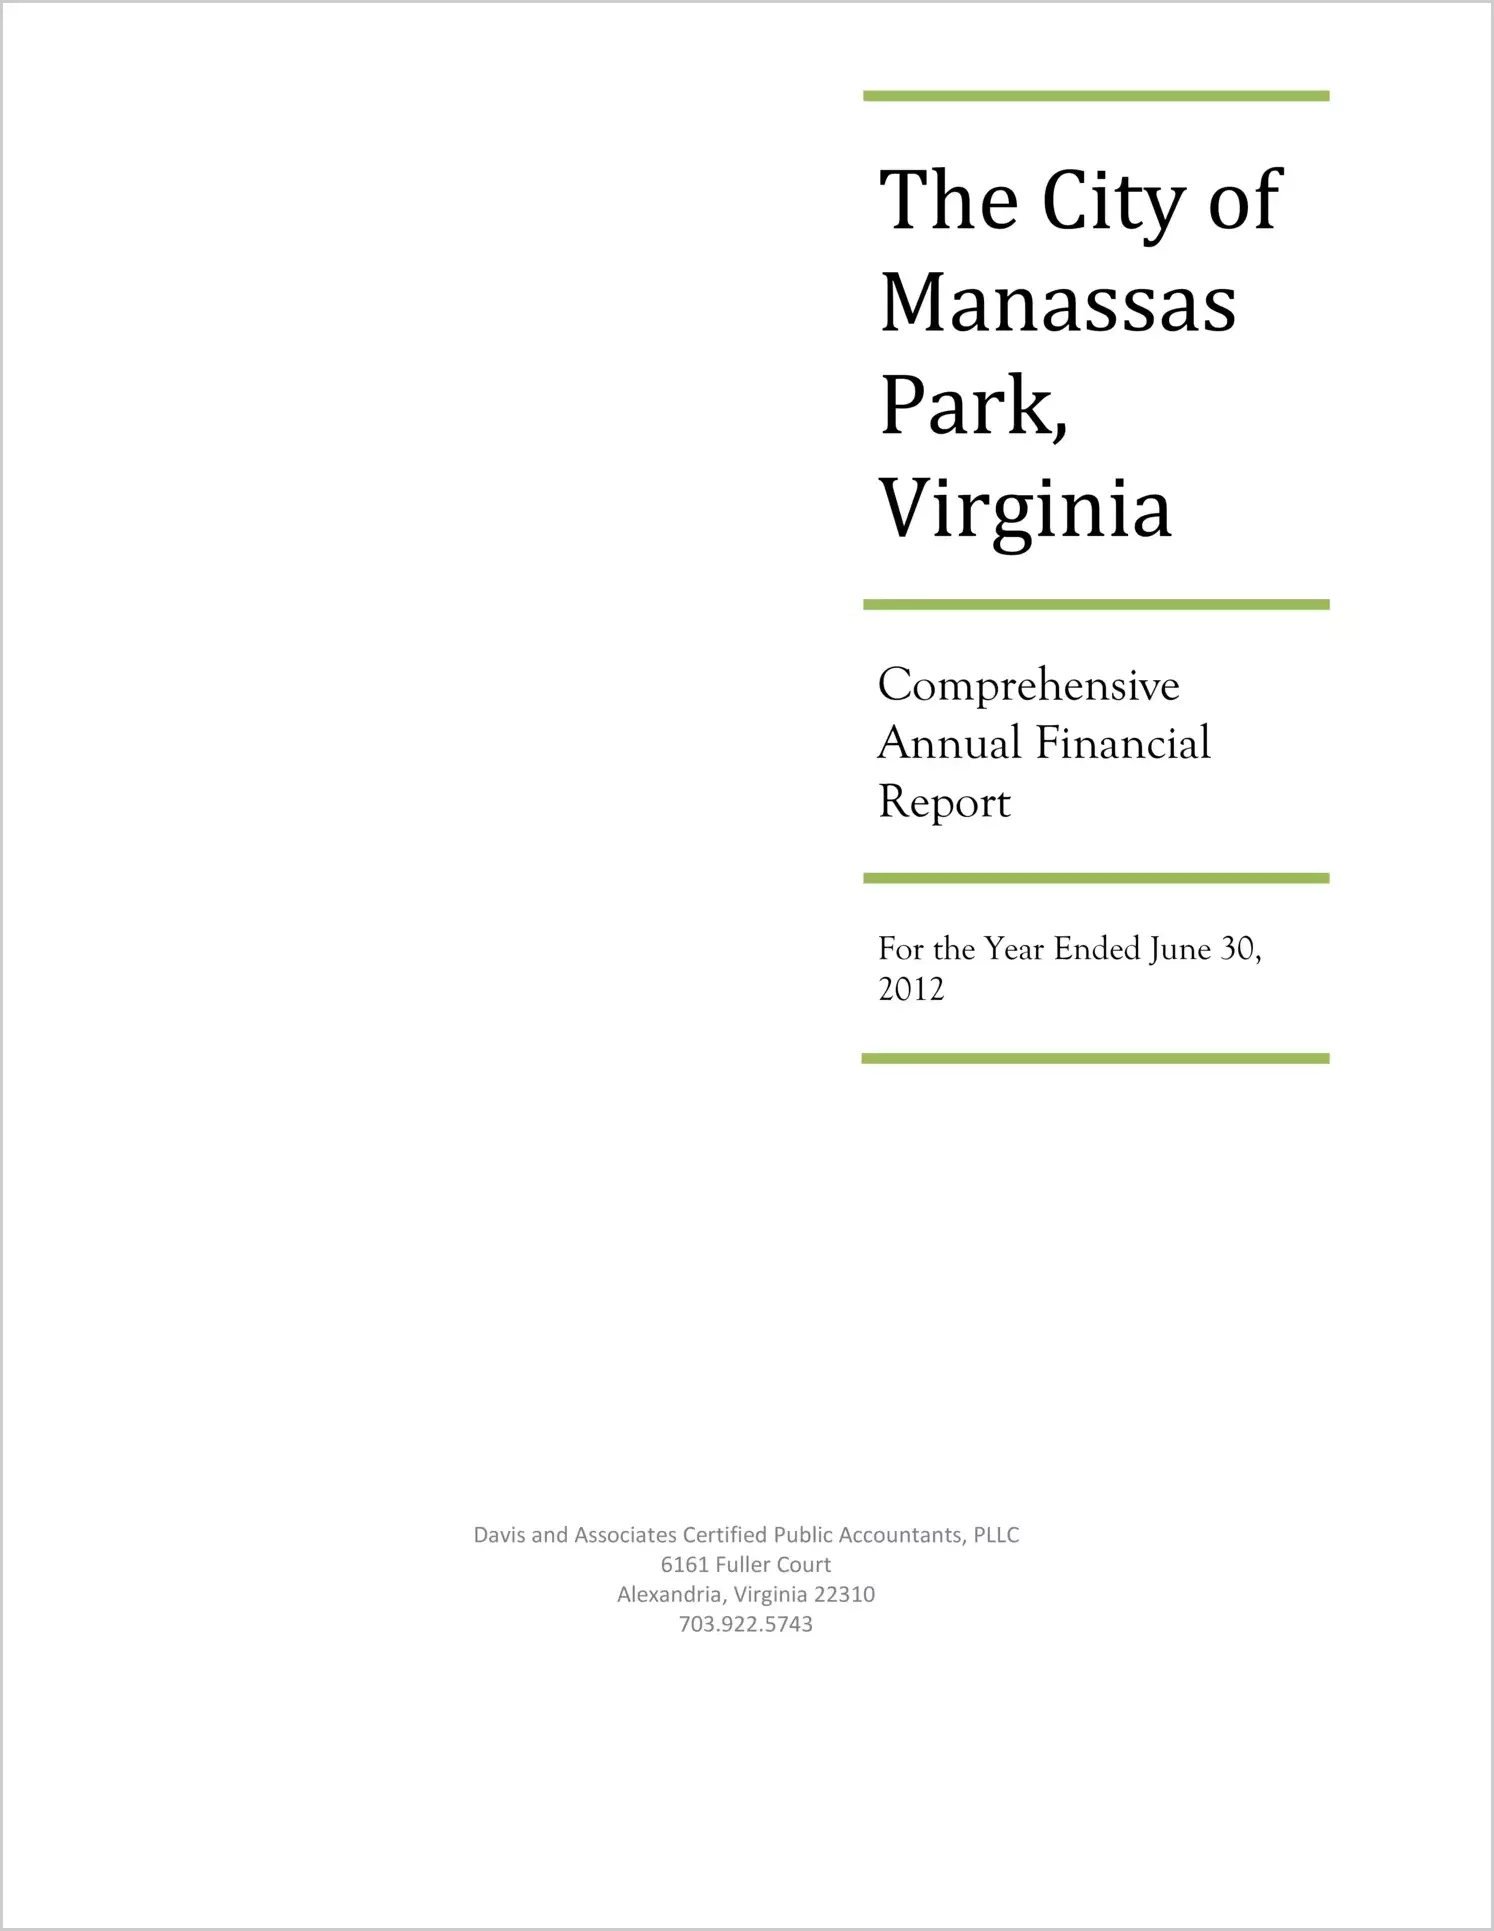 2012 Annual Financial Report for City of Manassas Park